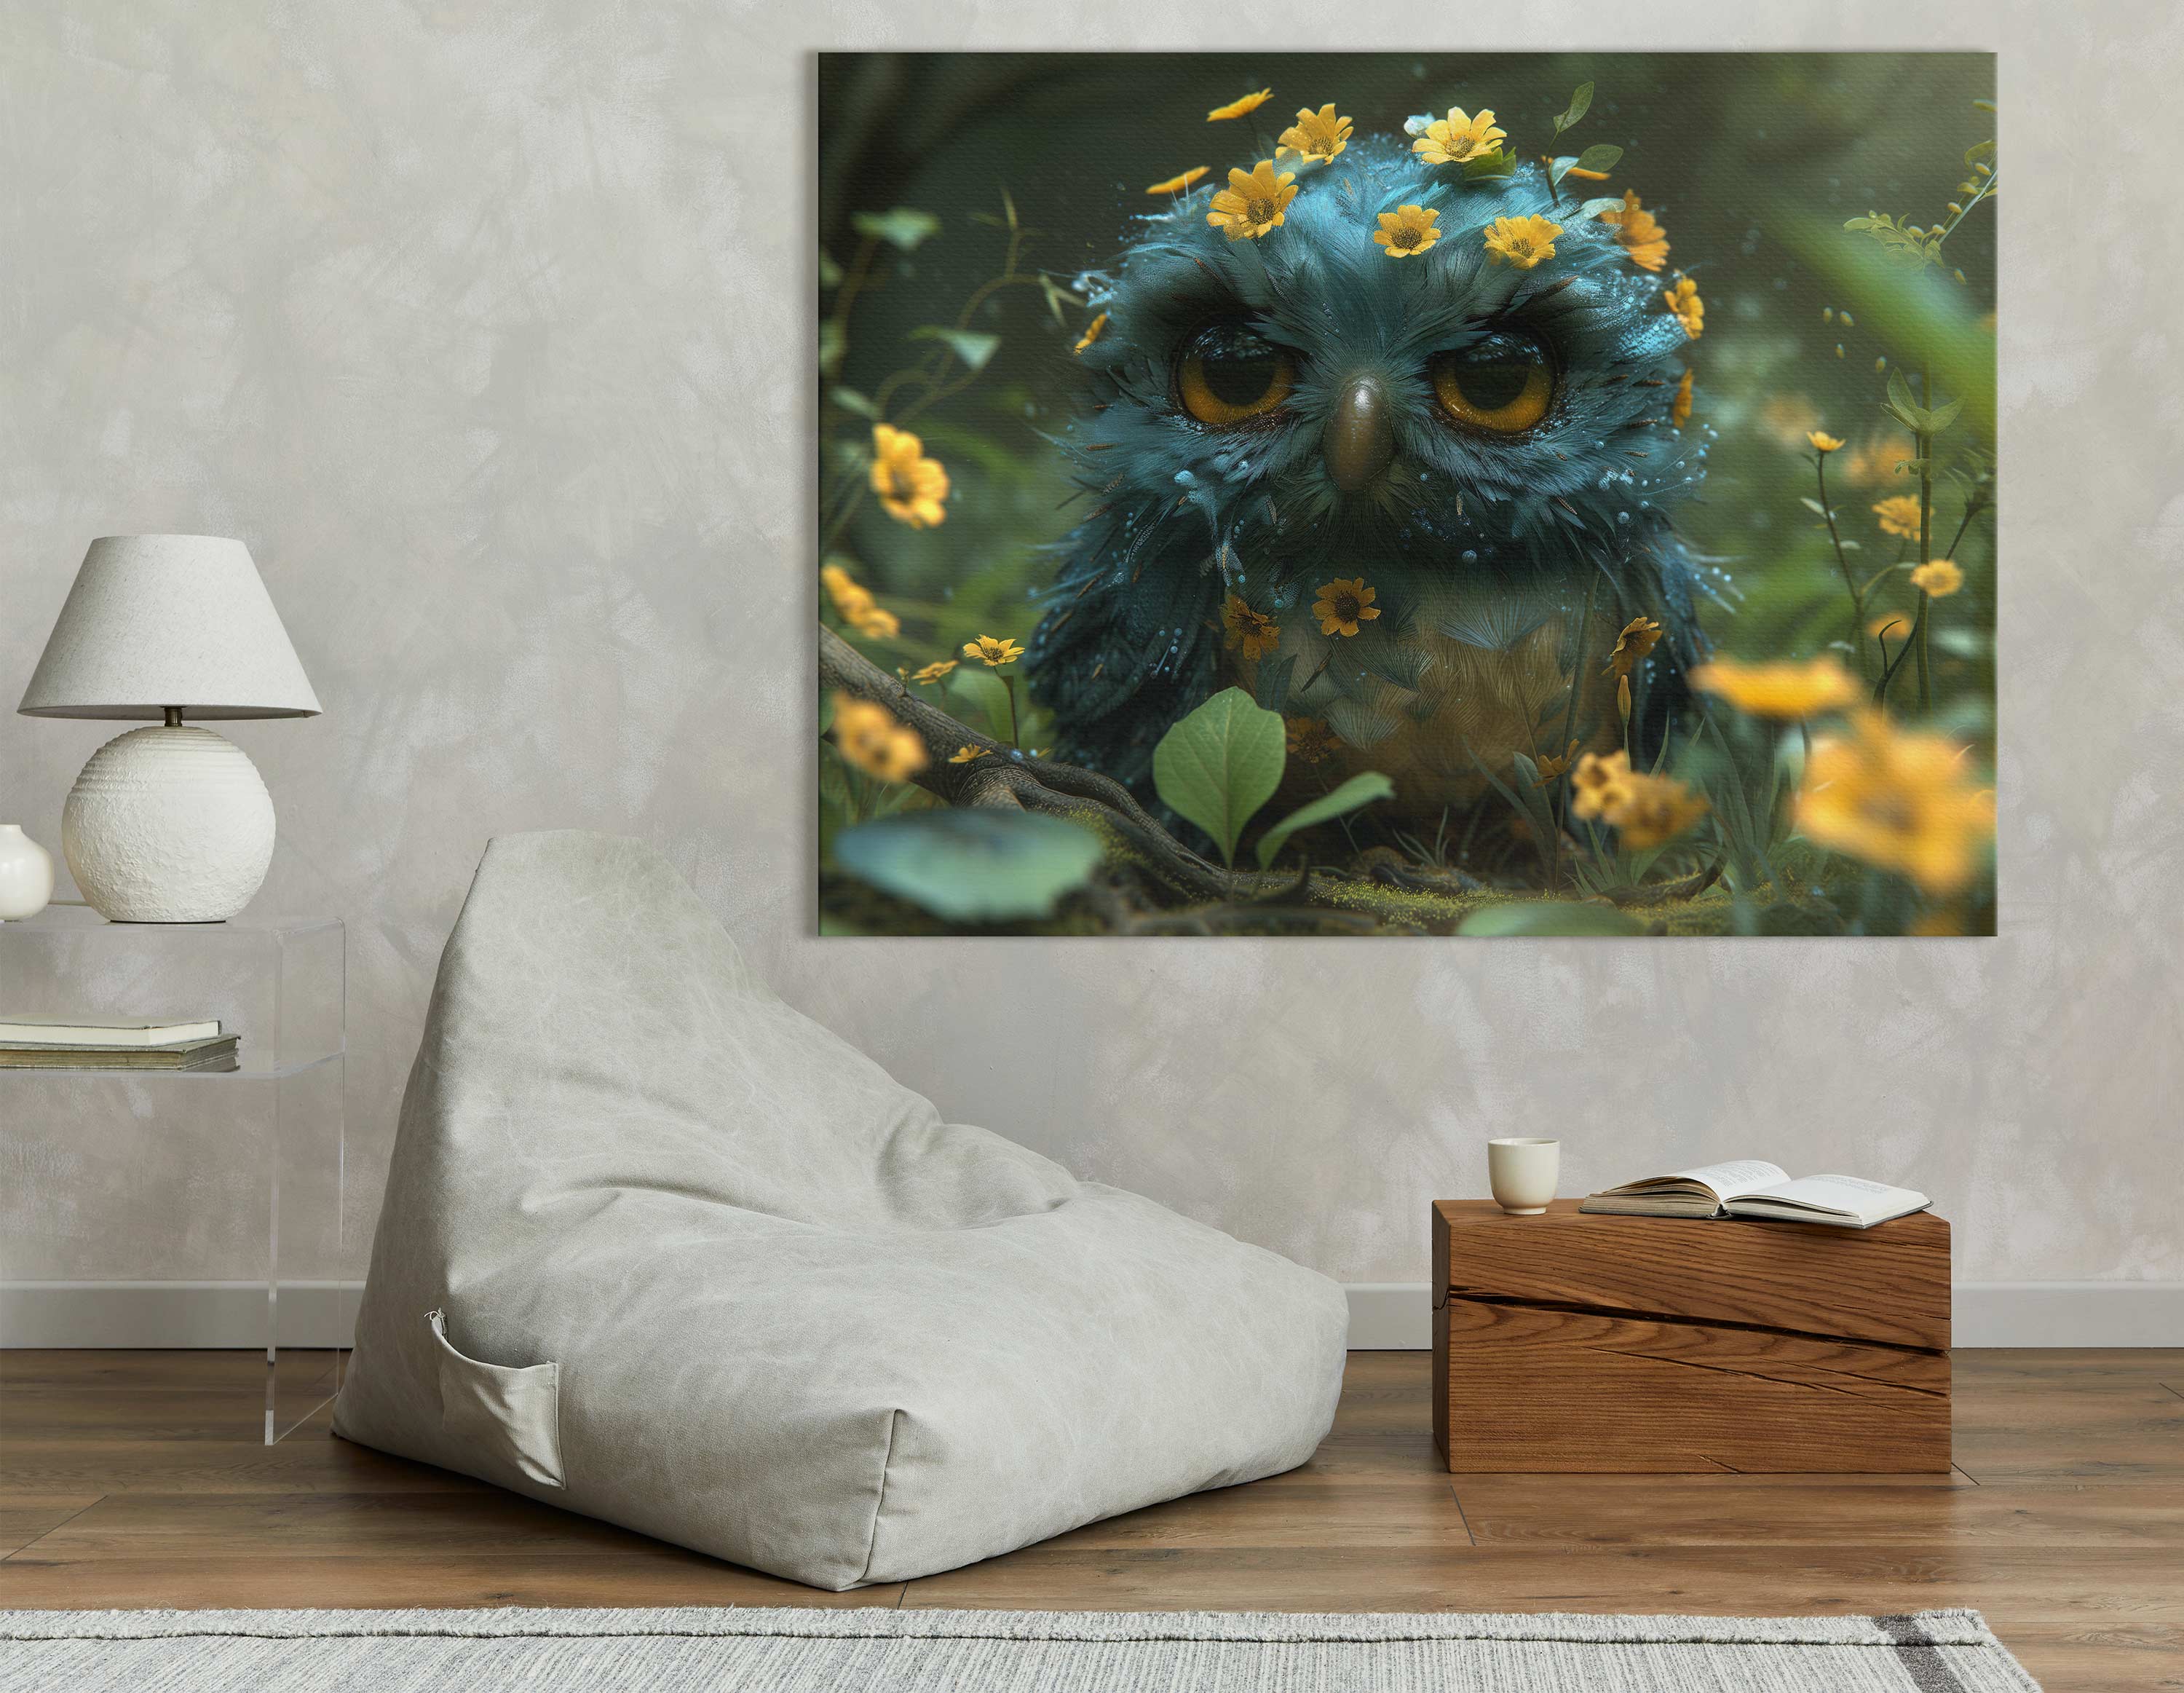  Captivating Owl Artwork